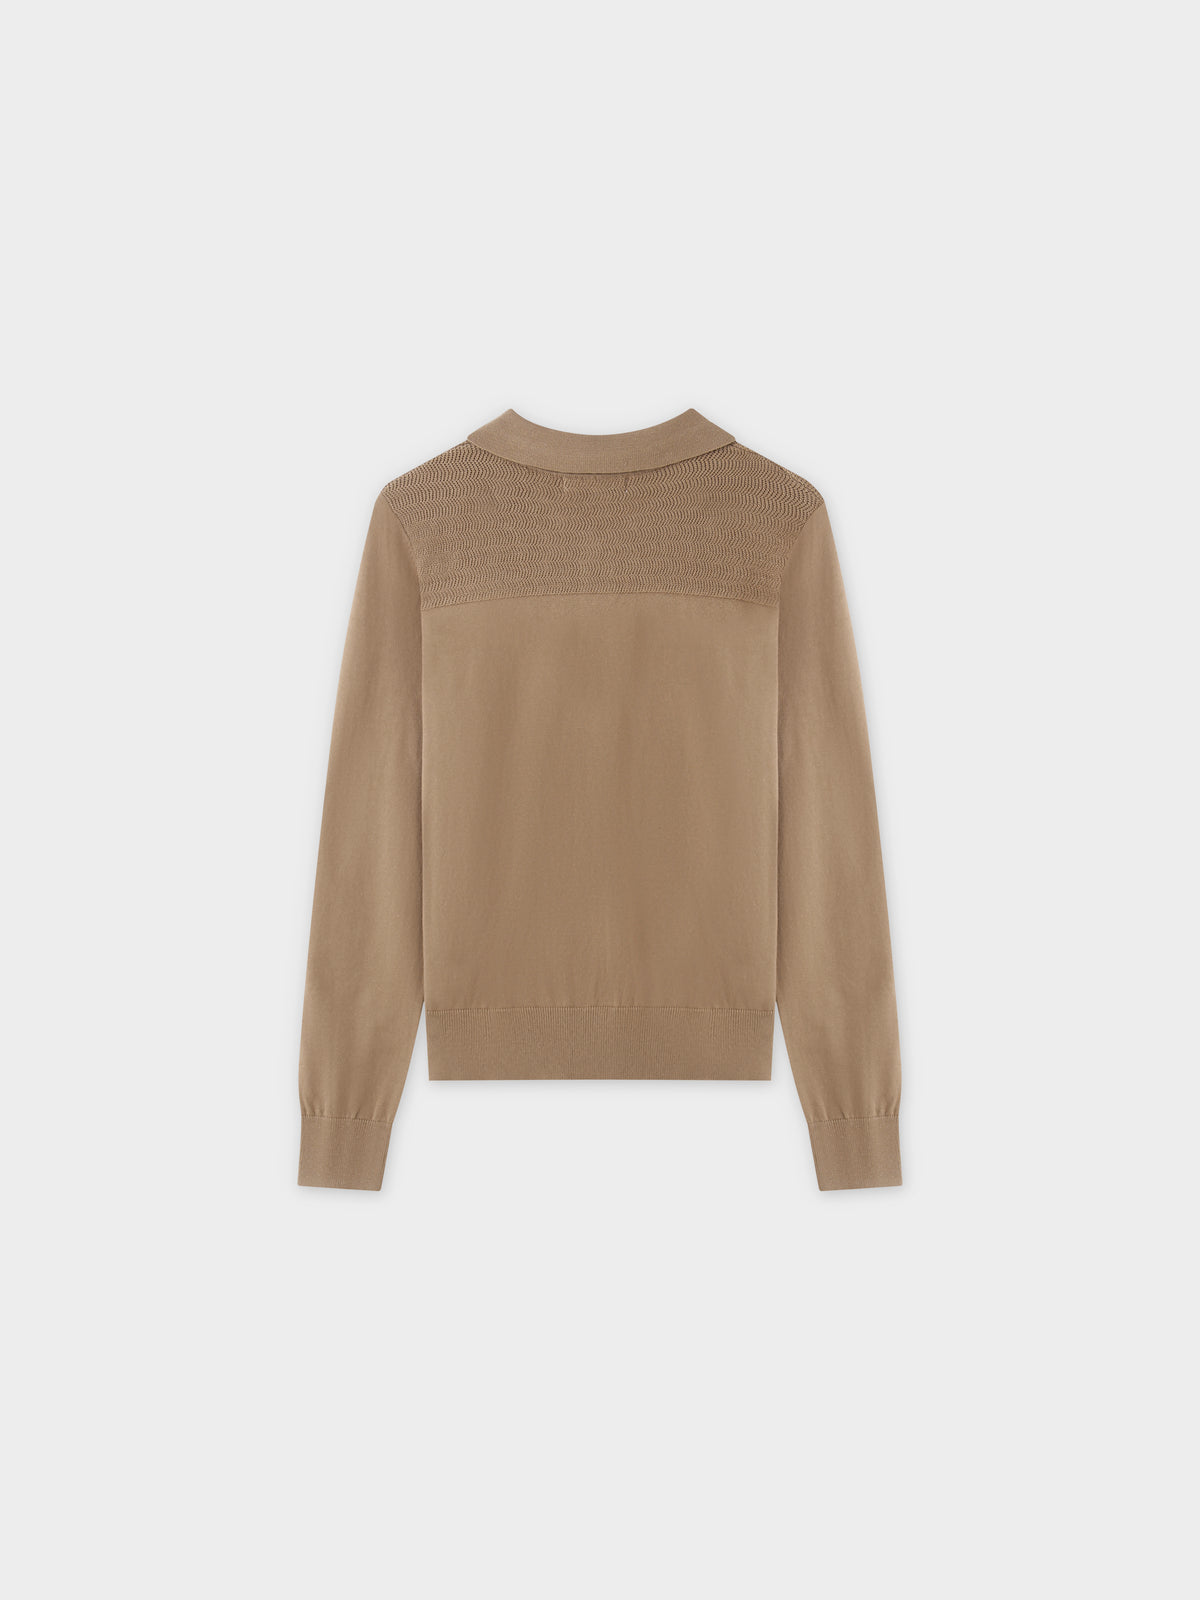 Mesh Top Sweater-Tan